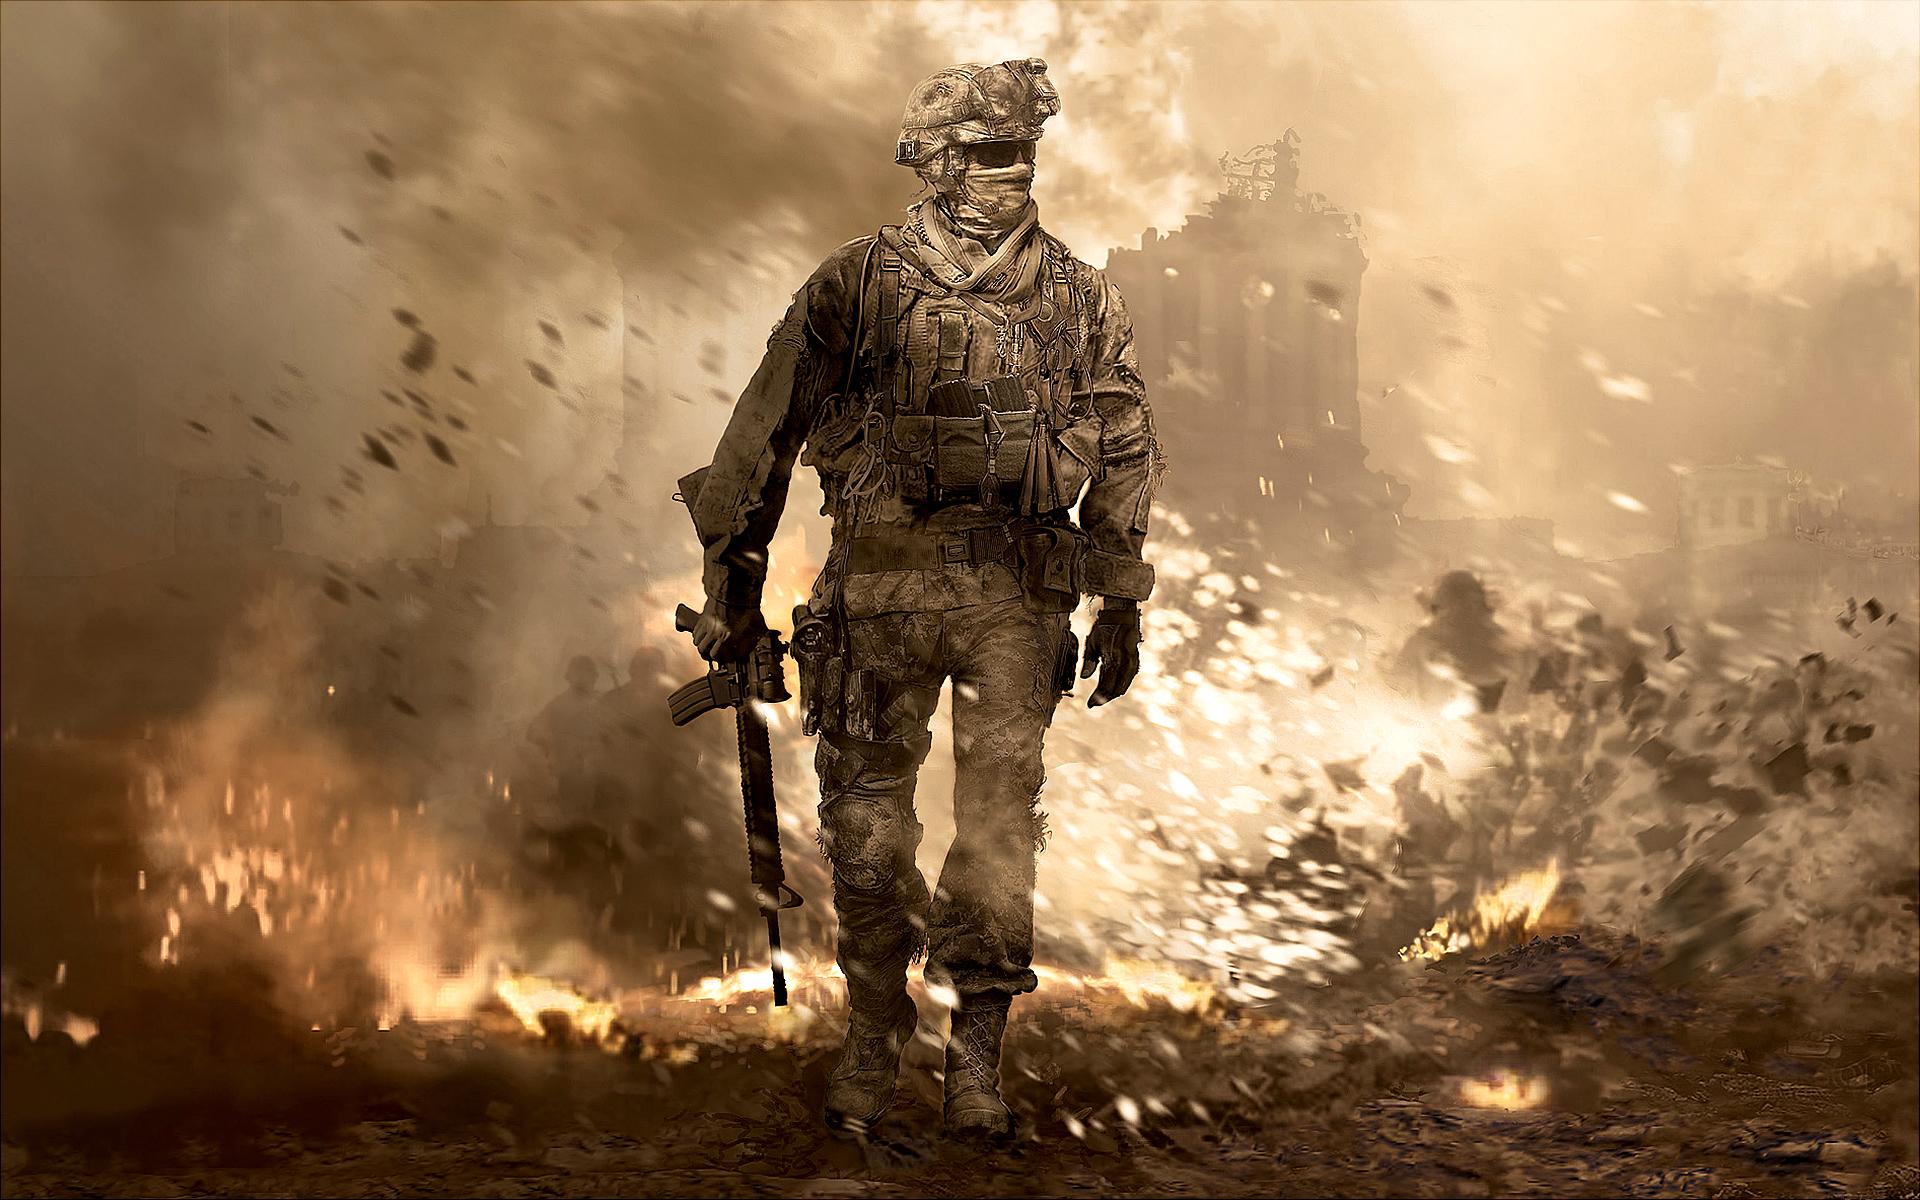 The fifth Call of Duty: Modern Warfare is called Modern Warfare 2